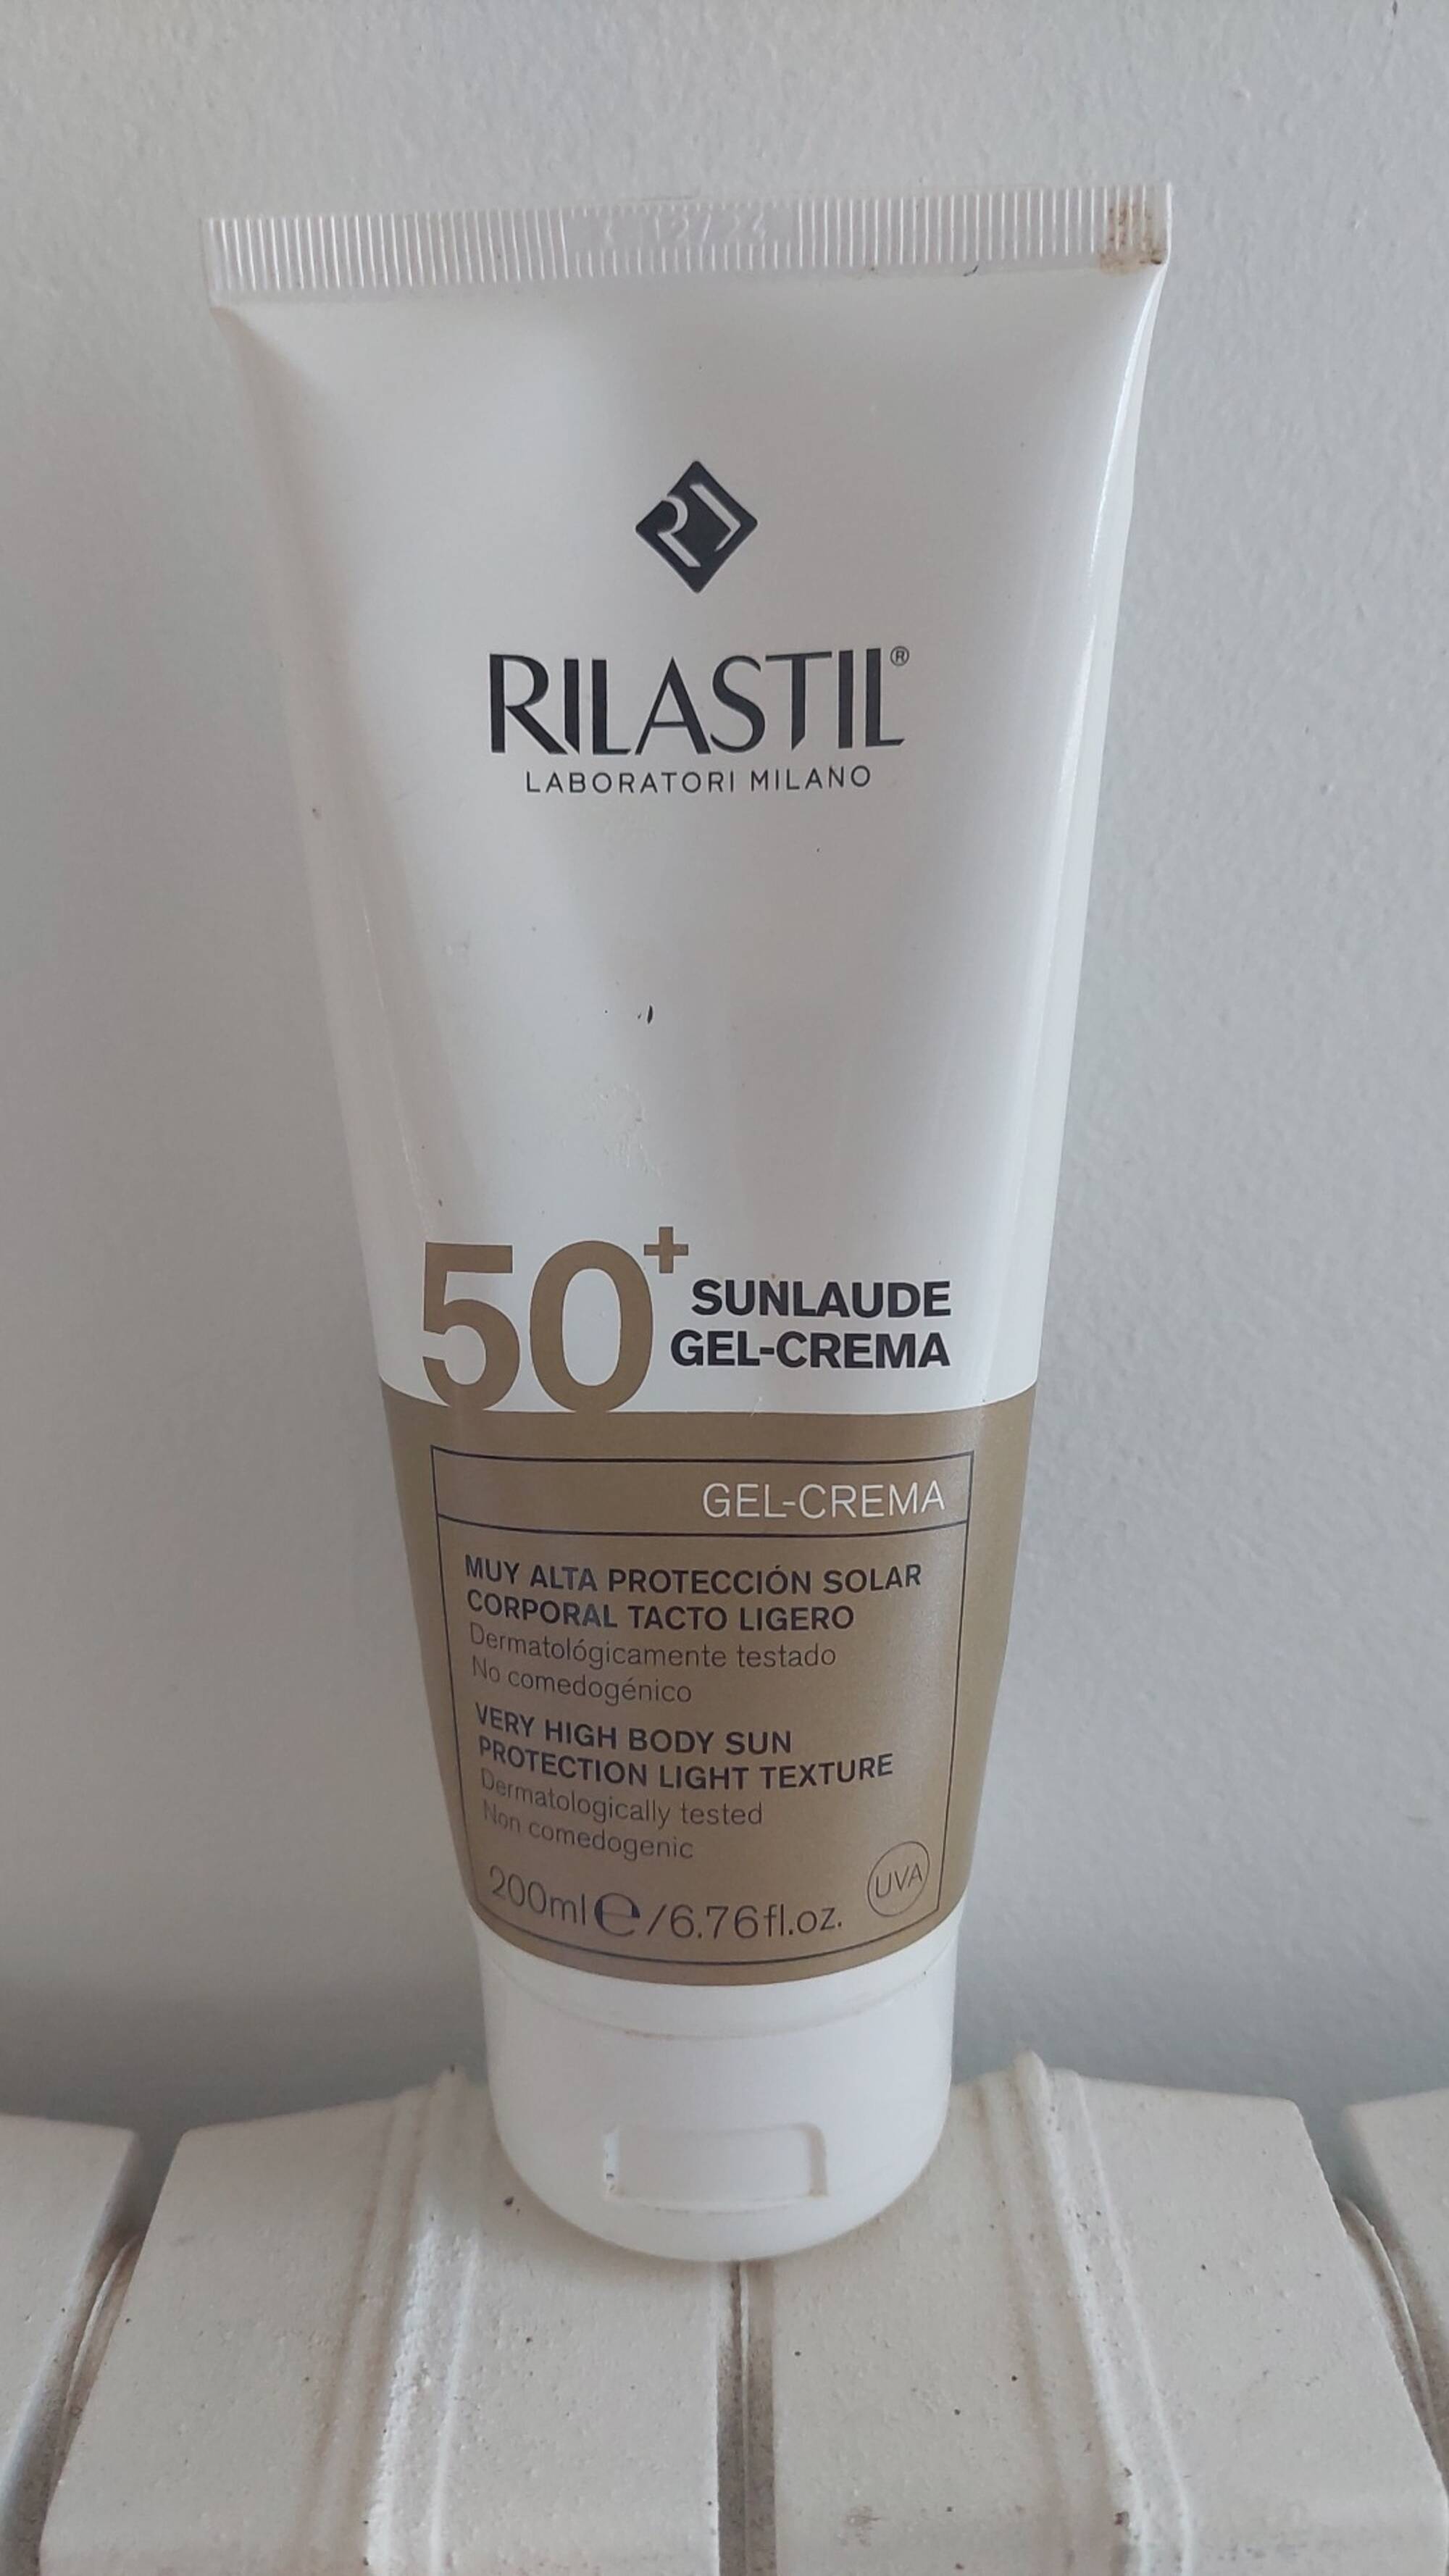 RILASTIL - 50+ sunlaude gel-crema